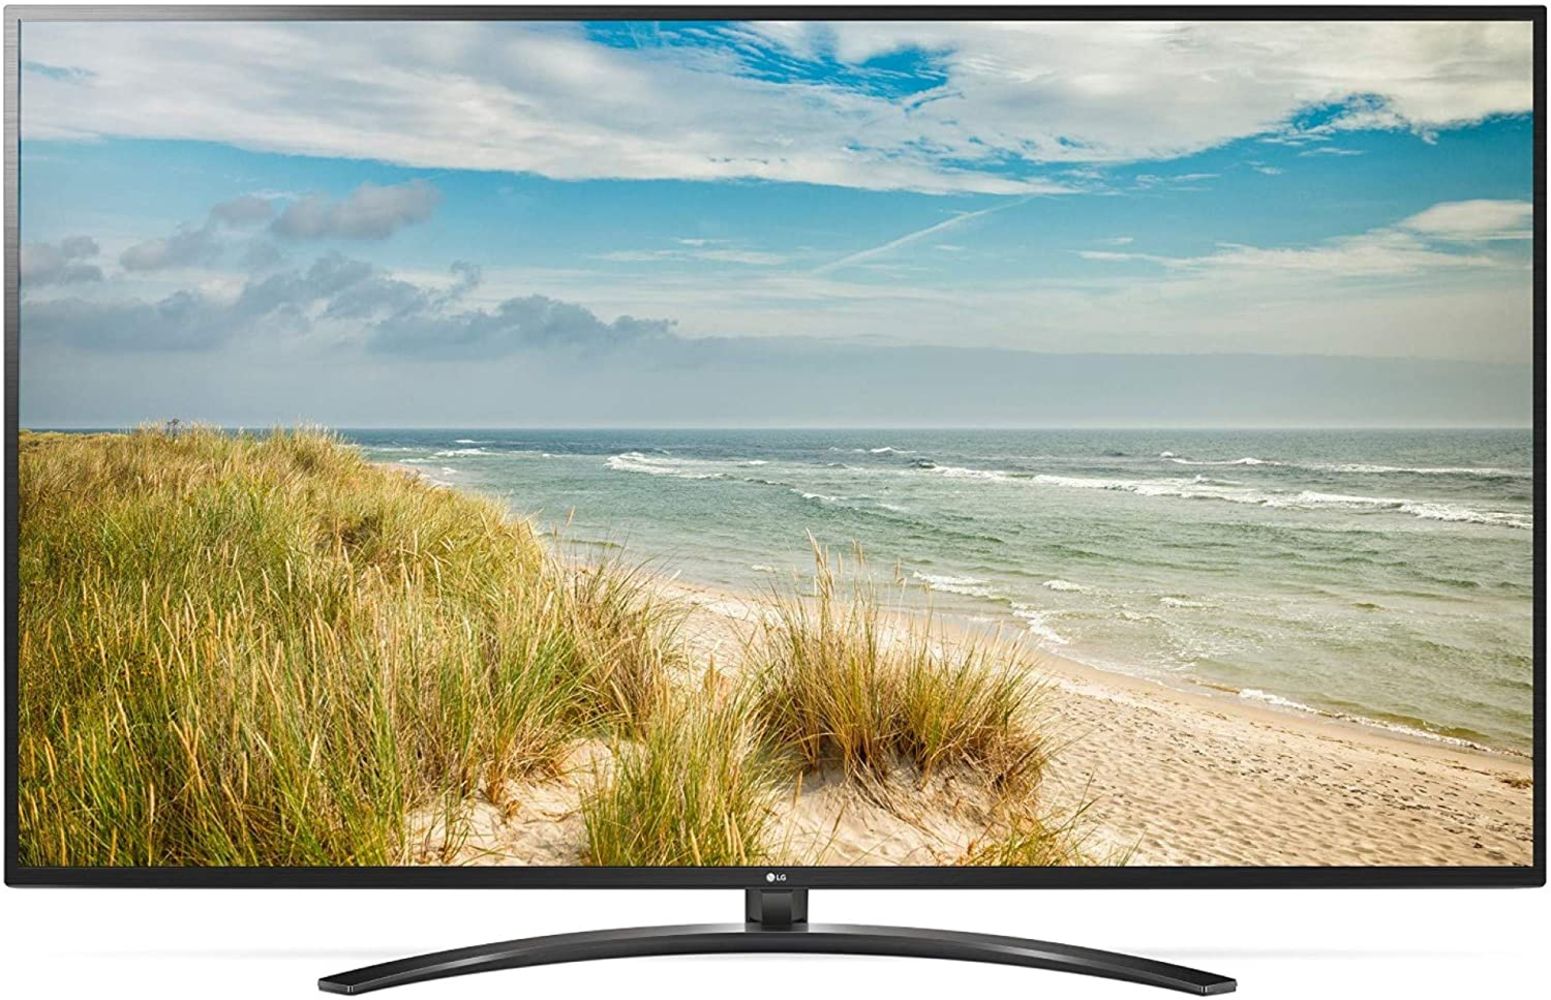 Big Spec UHD Smart TV's From LG & Samsung